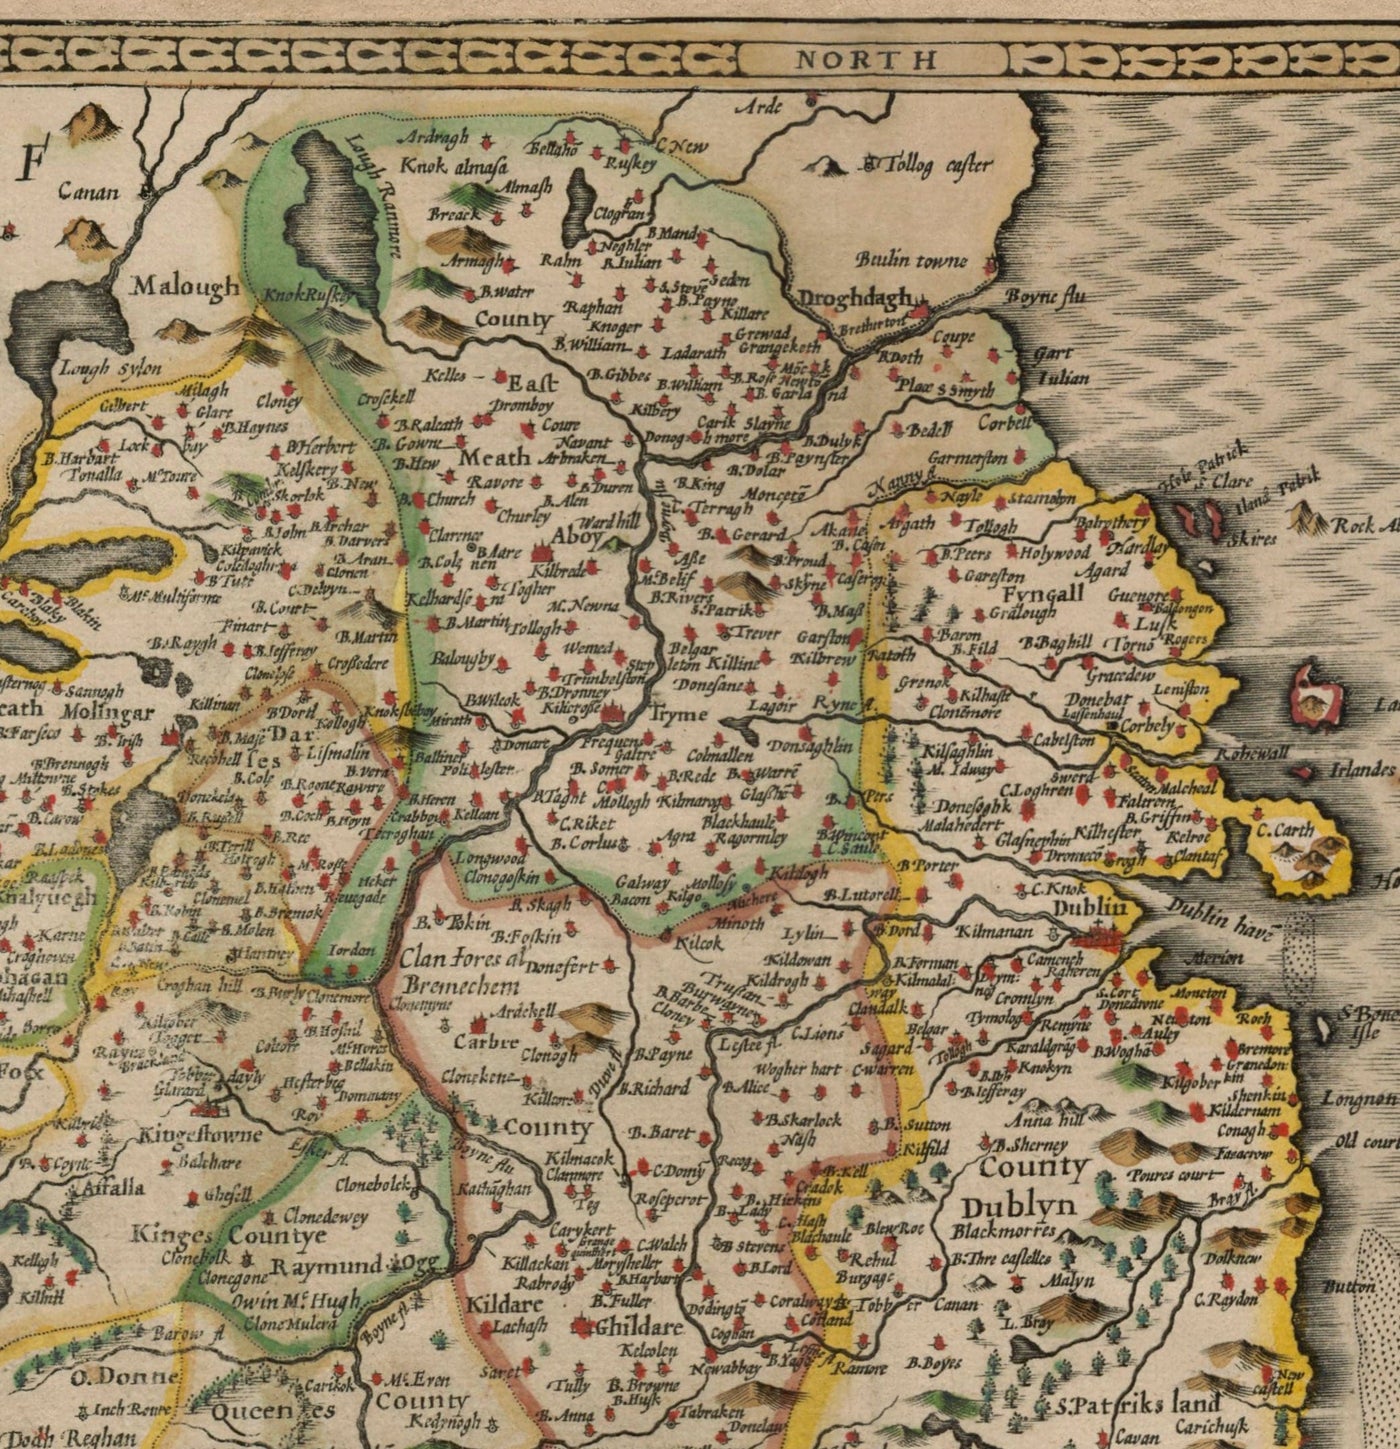 Old Map of Leinster, Ireland in 1611 by John Speed - County Dublin, Kilkenny, Meath